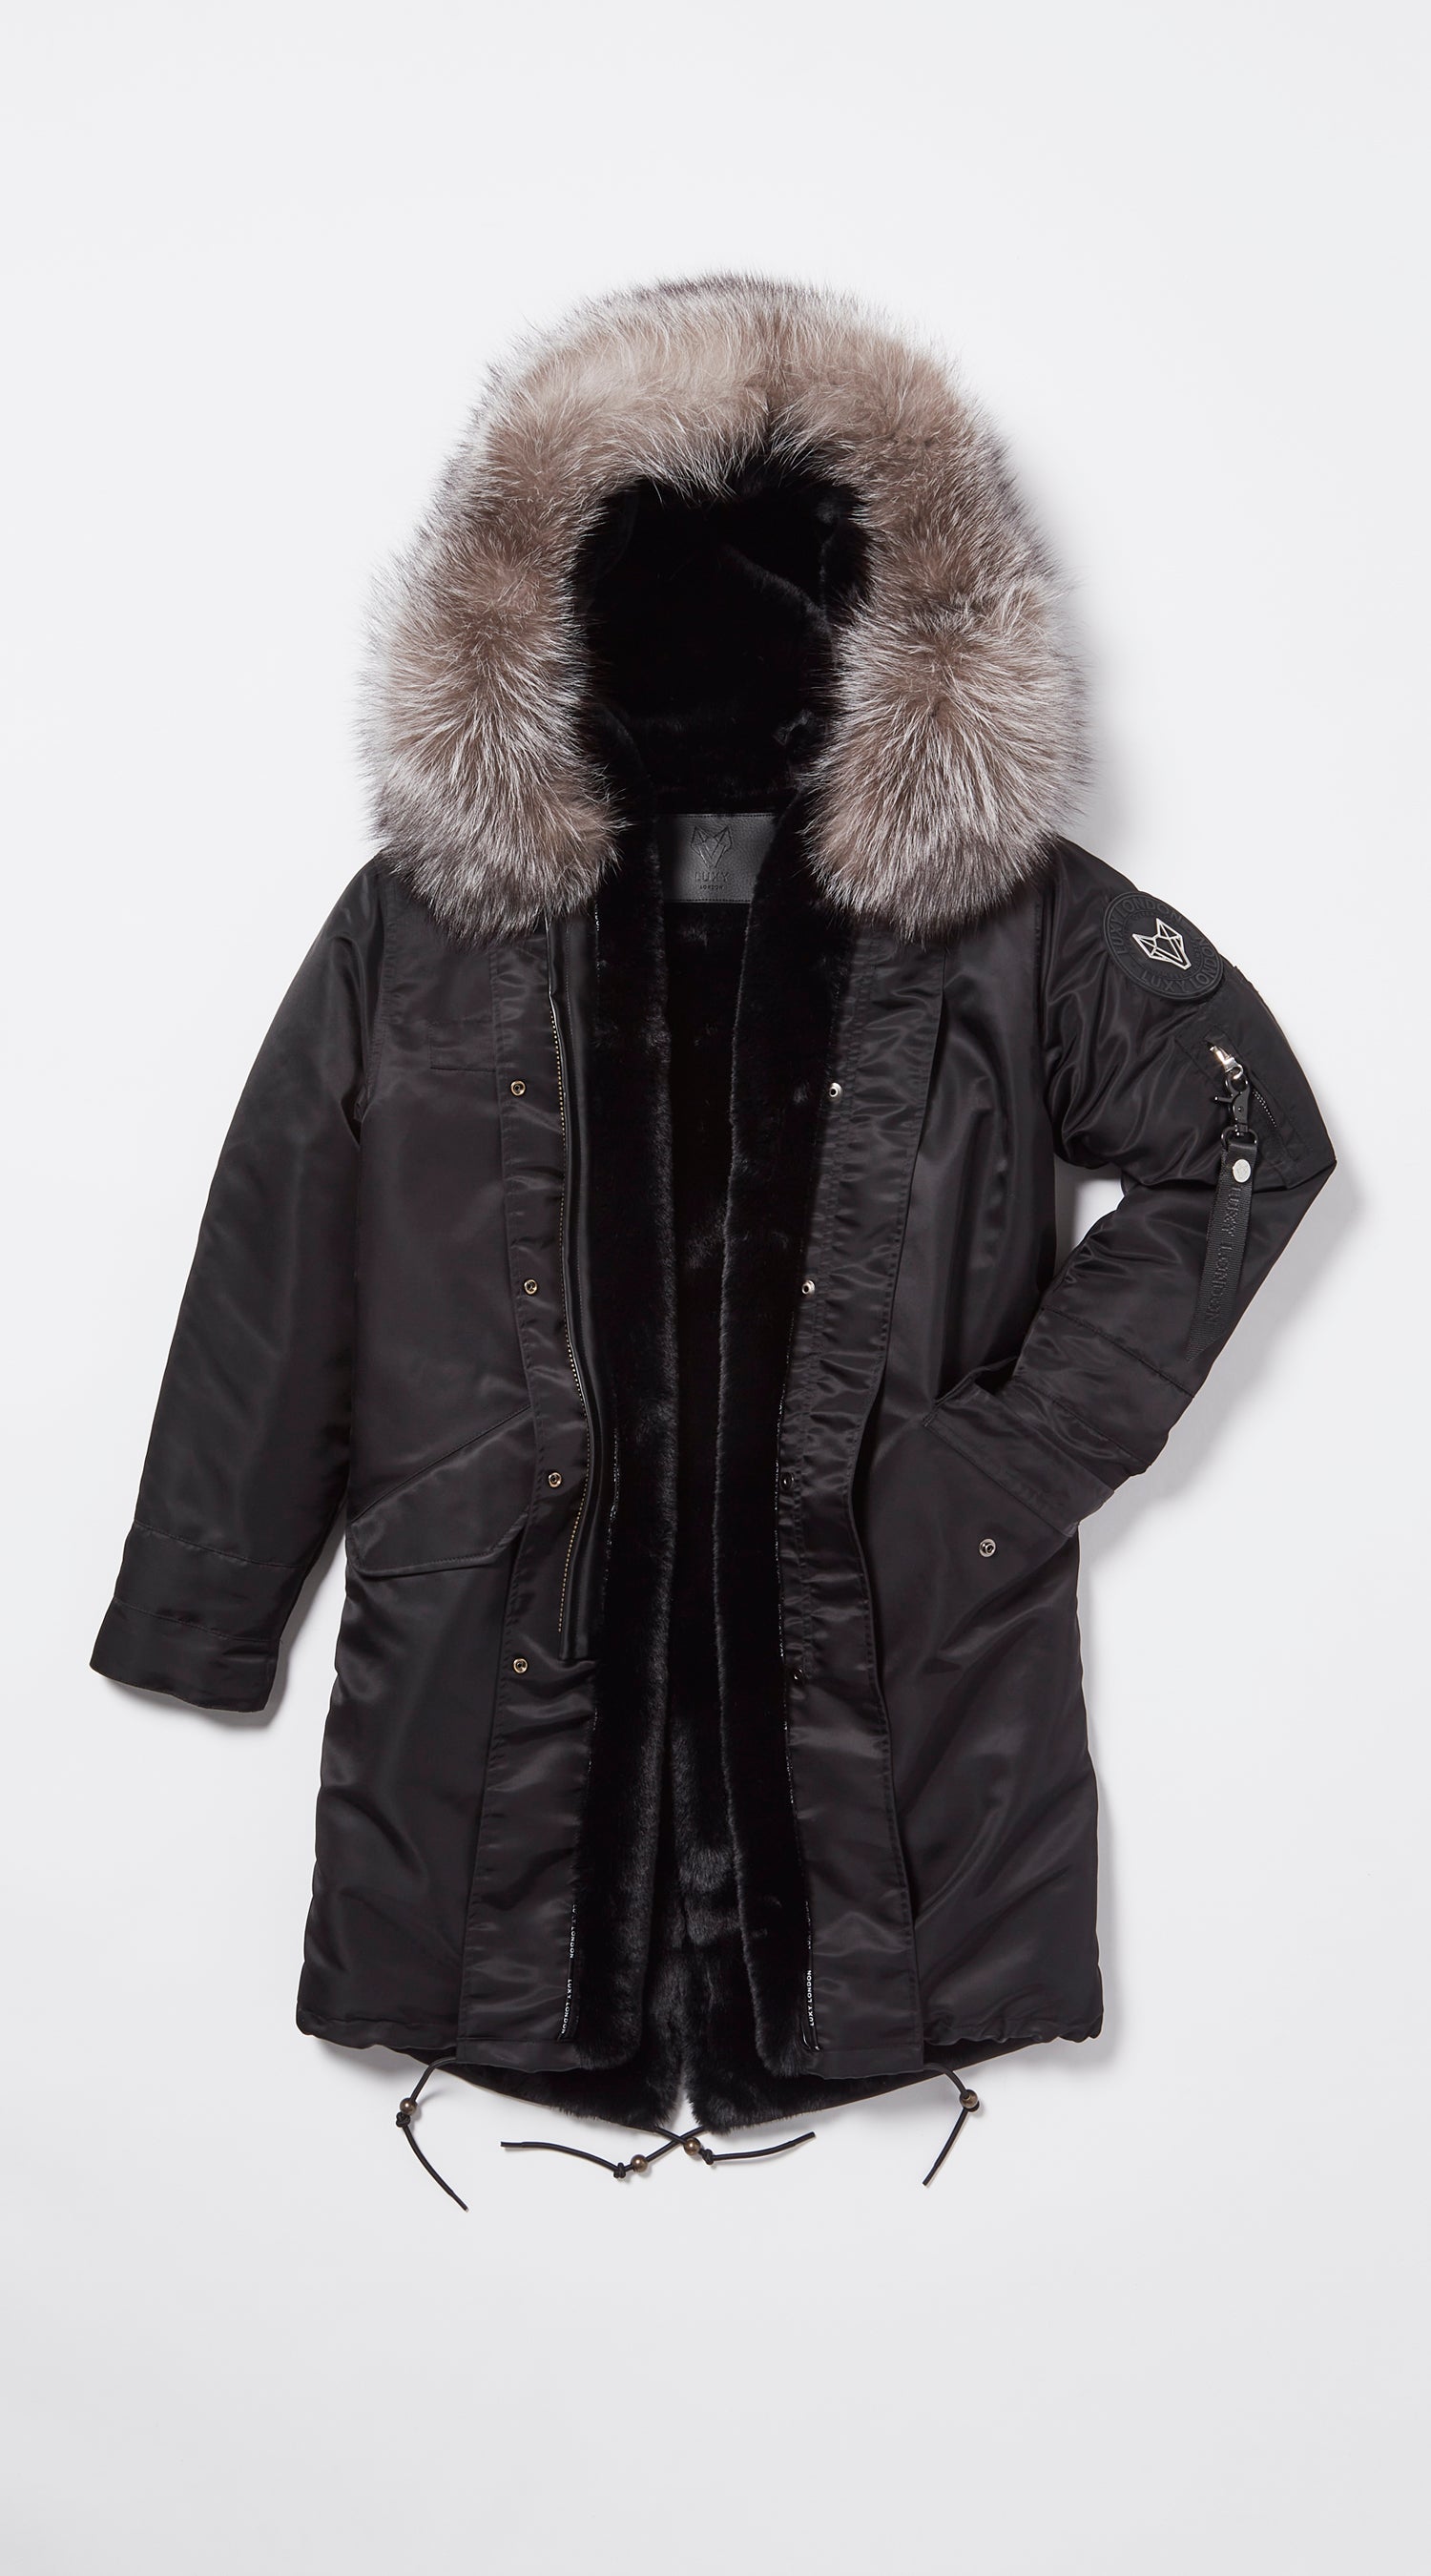 Glacier Wear - Men's and Women's Real Fur Lined Parka, Real Fur